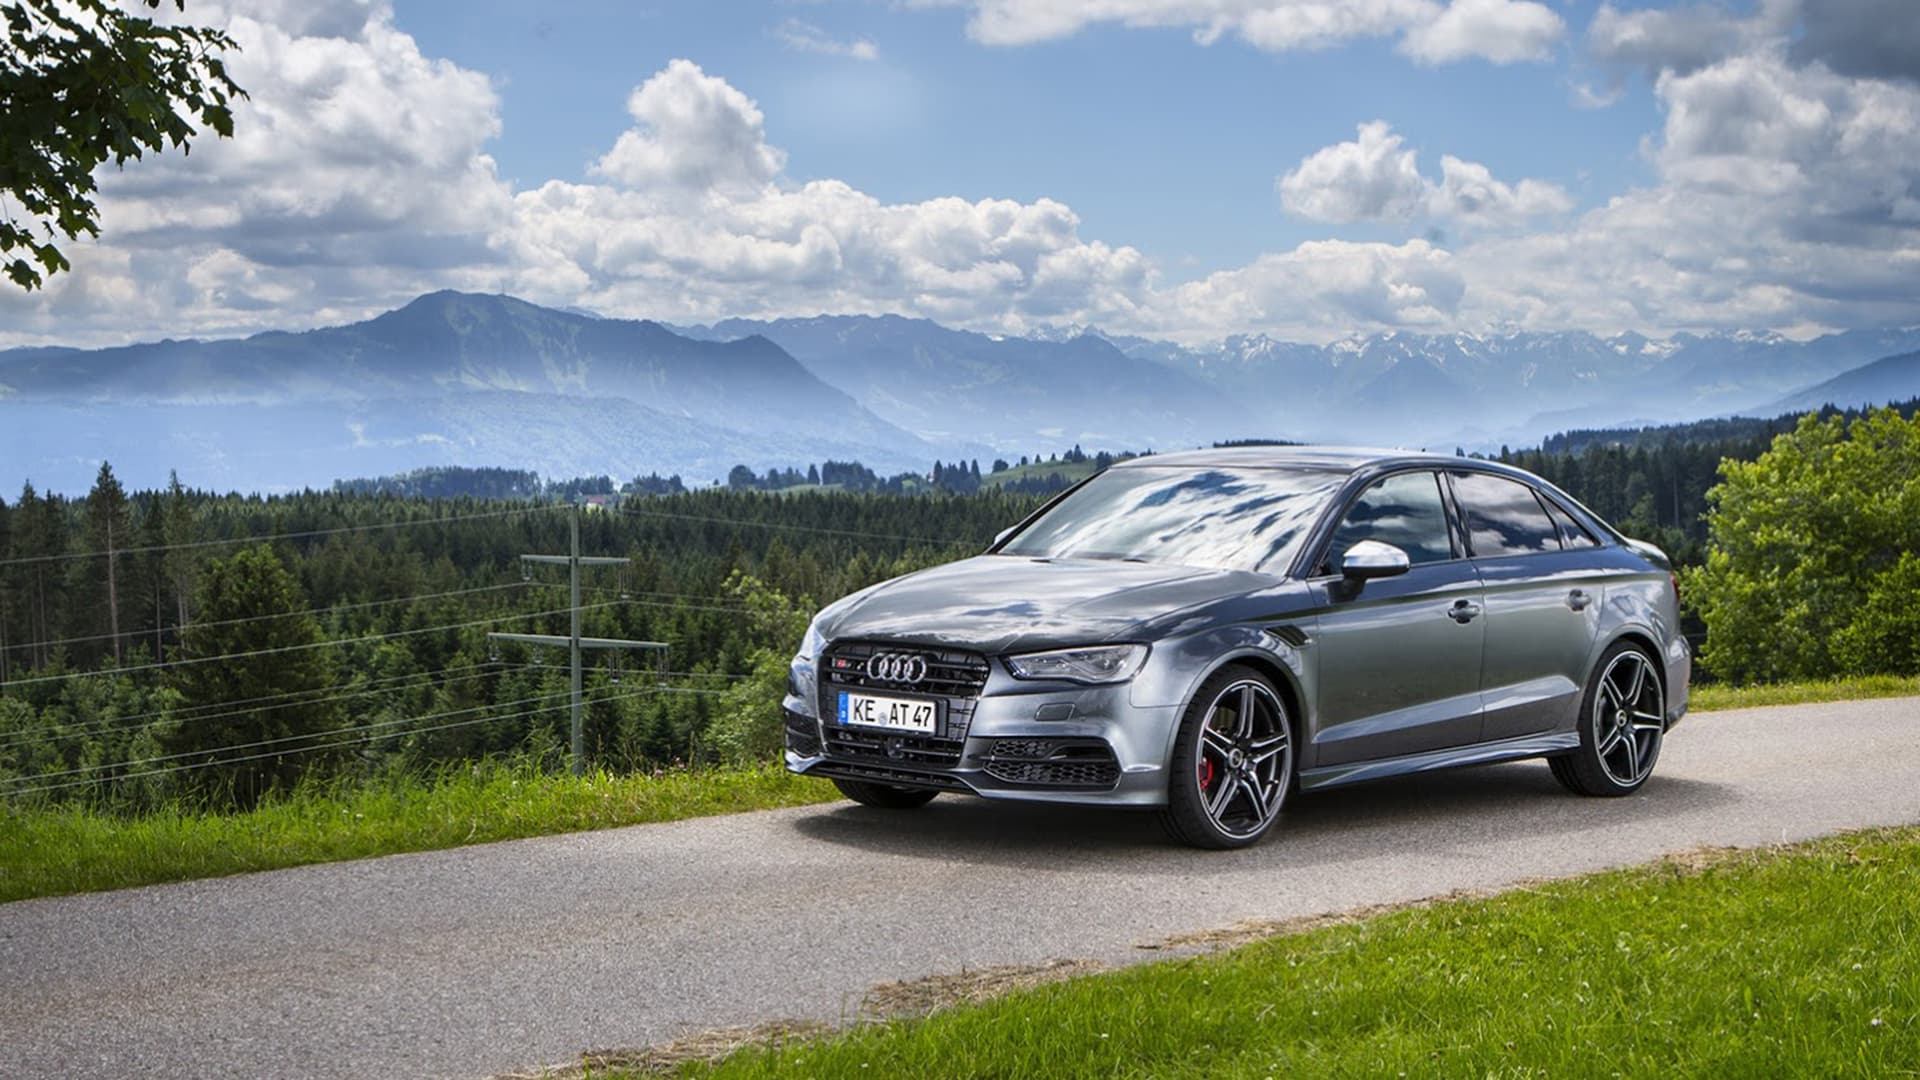 Audi S3 Sedan Wallpaper High Quality Resolution